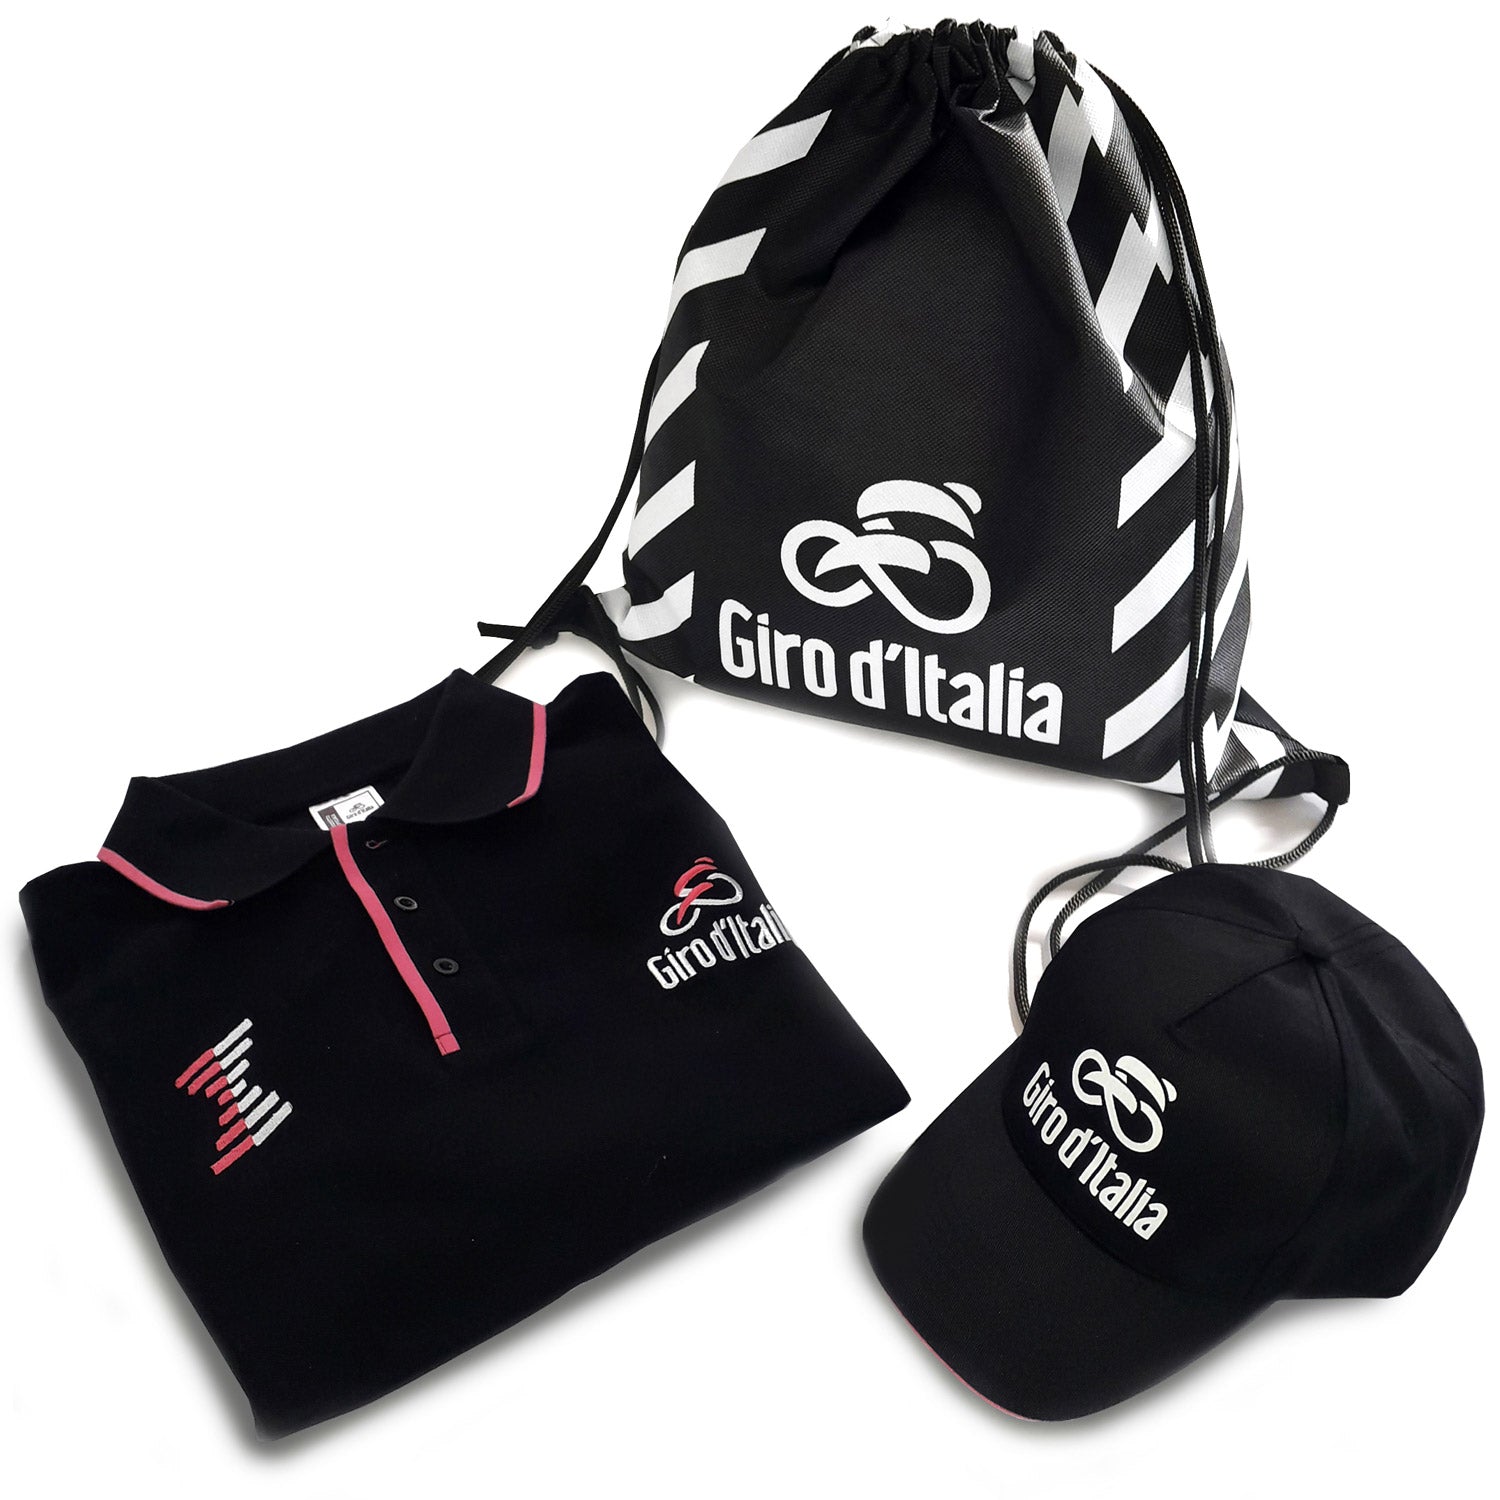 Polo kit Giro d'italia Black All4cycling